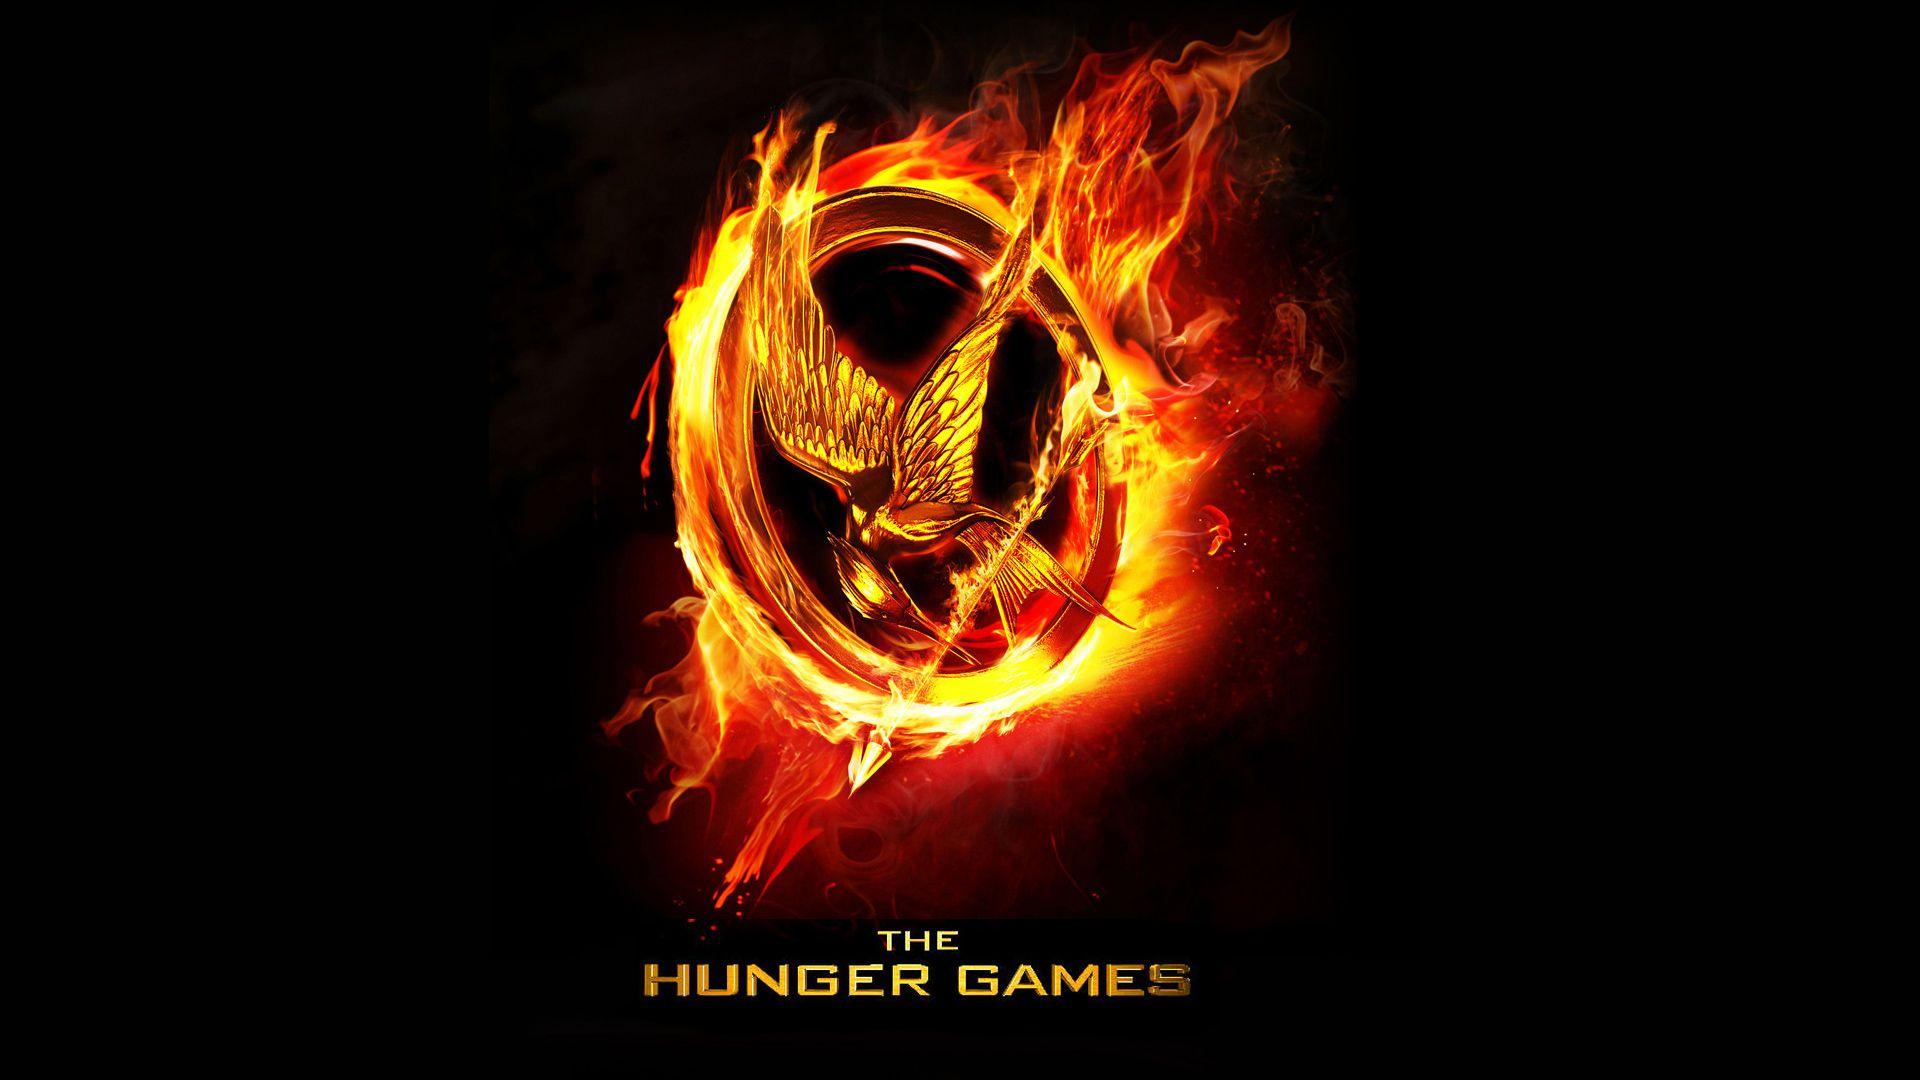 Wallpaper.wiki Beautiful Hunger Games Full Hd Image 1080p PIC